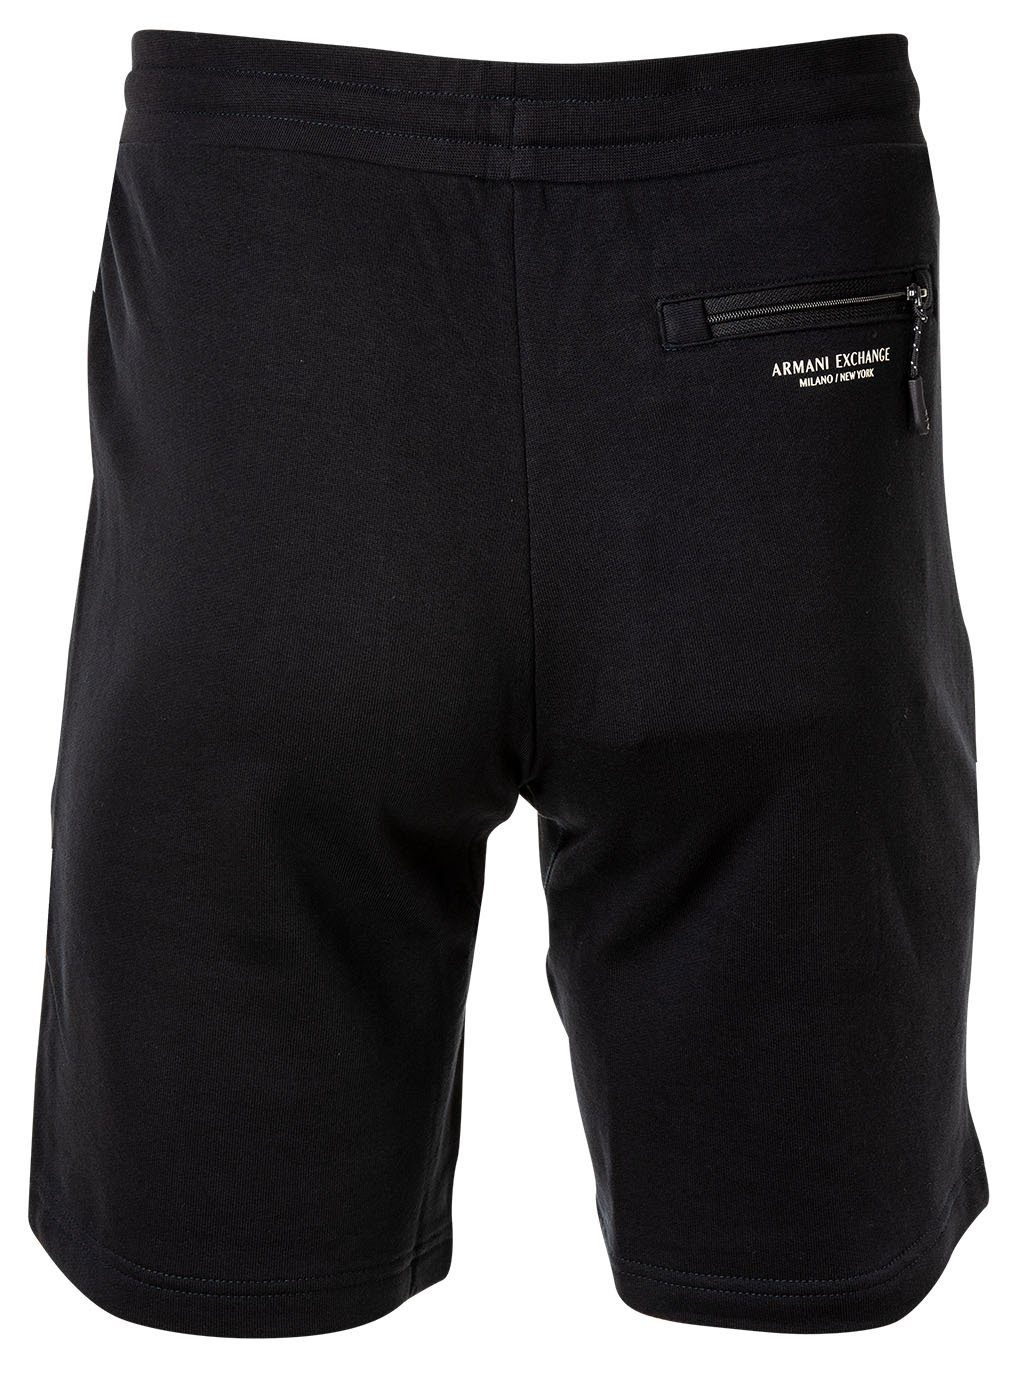 ARMANI EXCHANGE Sweatshorts Herren Jogginghose Loungewear - kurz Pants, Marine